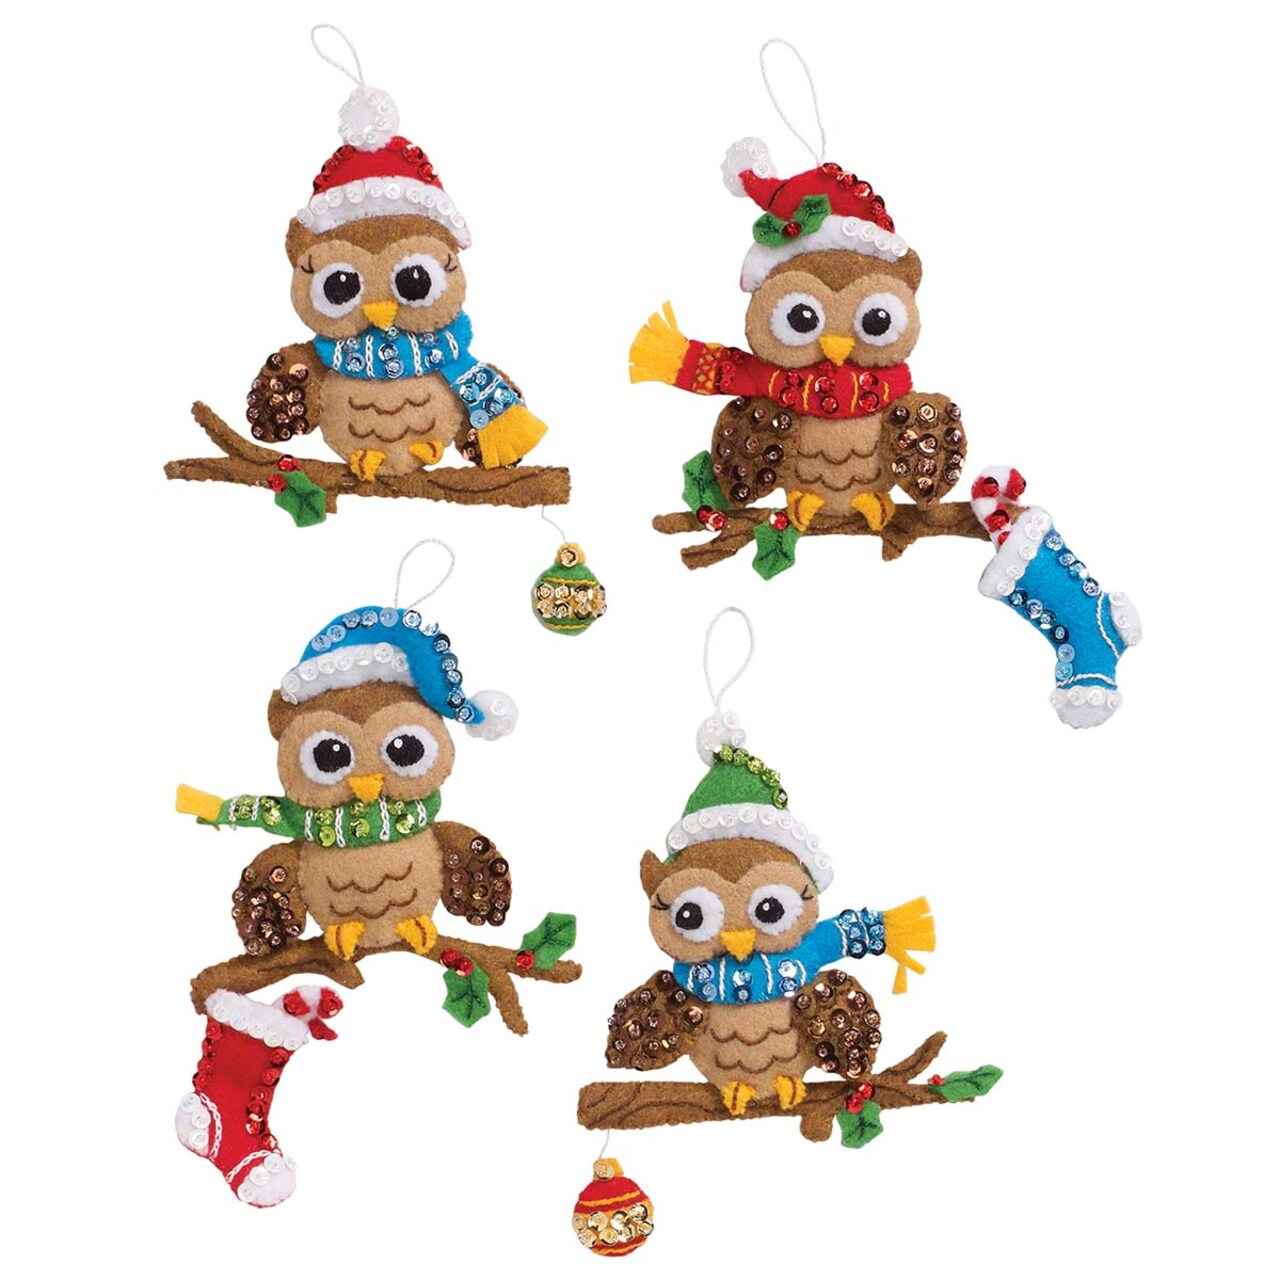 Bucilla Christmas Owl Ornament Kit